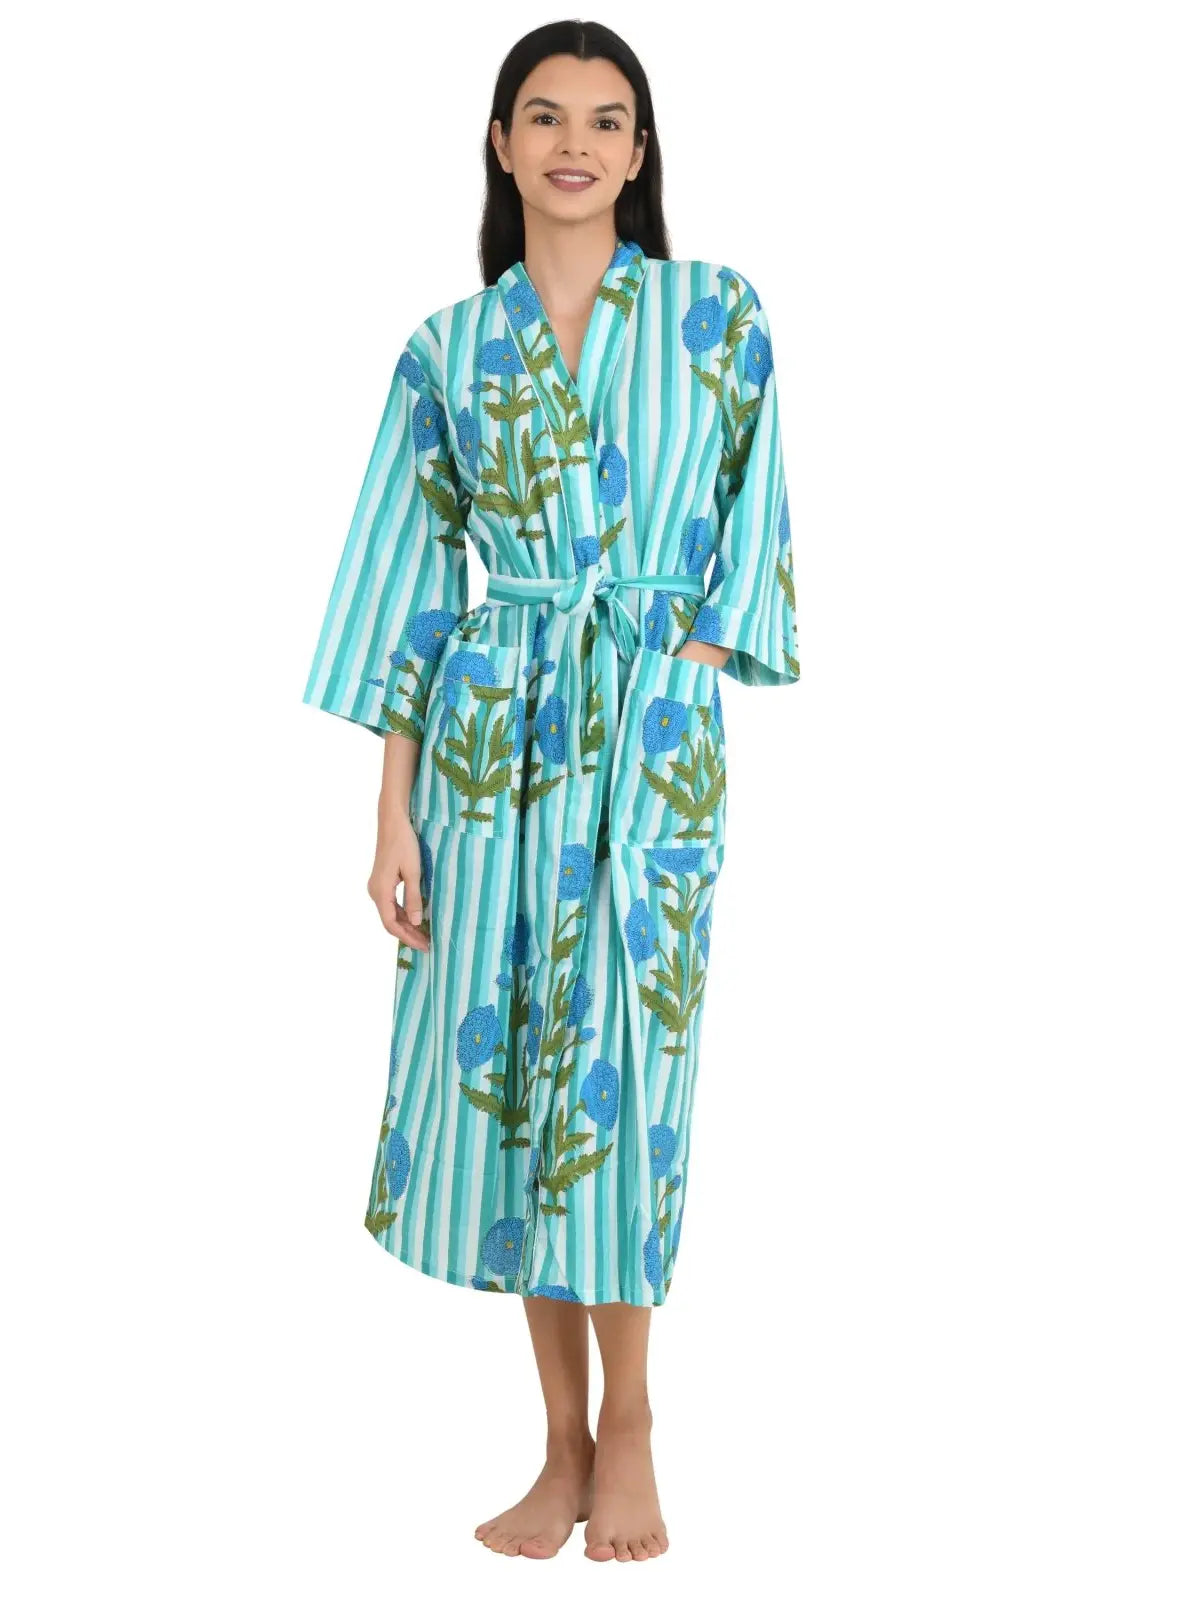 Boho Cotton Kimono House Robe Indian Handprinted Floral Print Pattern | Lightweight Summer Luxury Beach Holidays Yacht Cover Up Stunning Dress